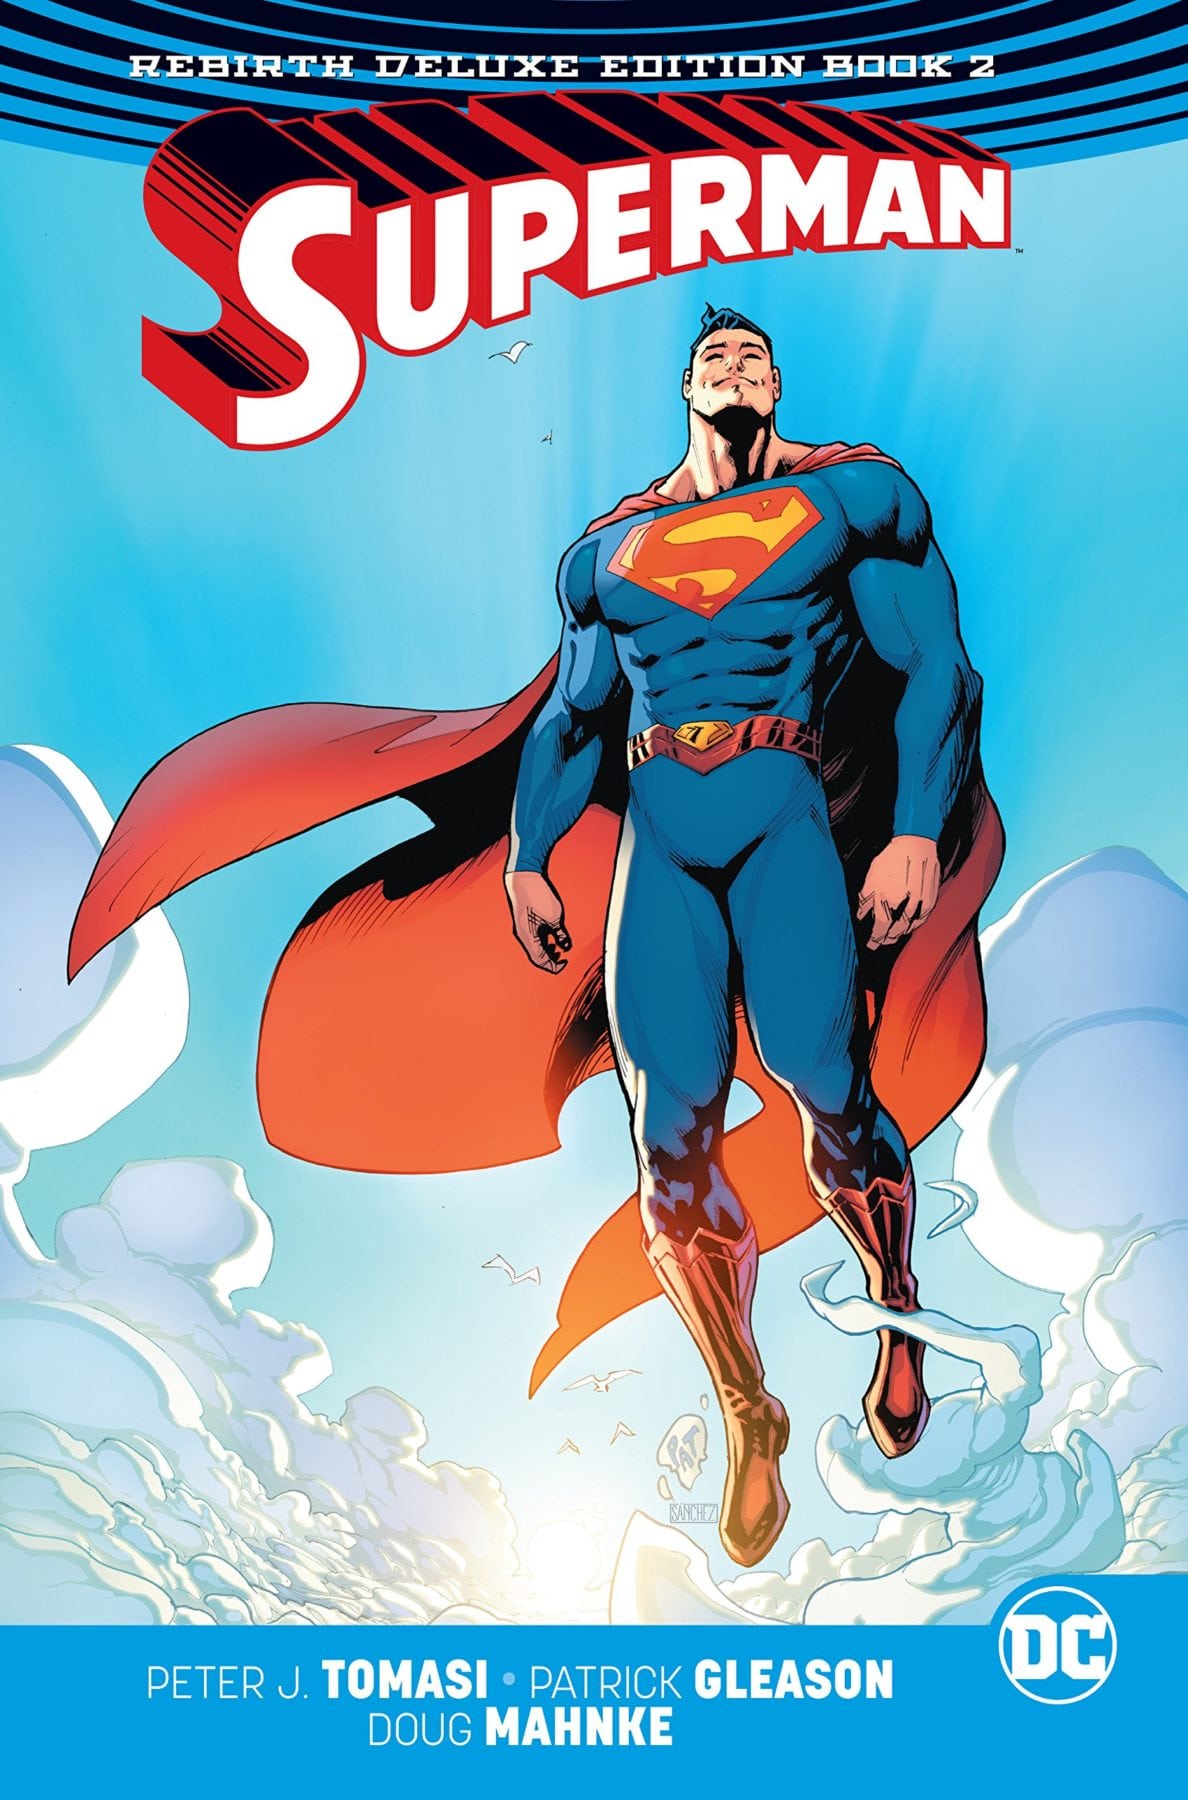 Comic Book Review - Superman: Rebirth Deluxe Edition Book 2